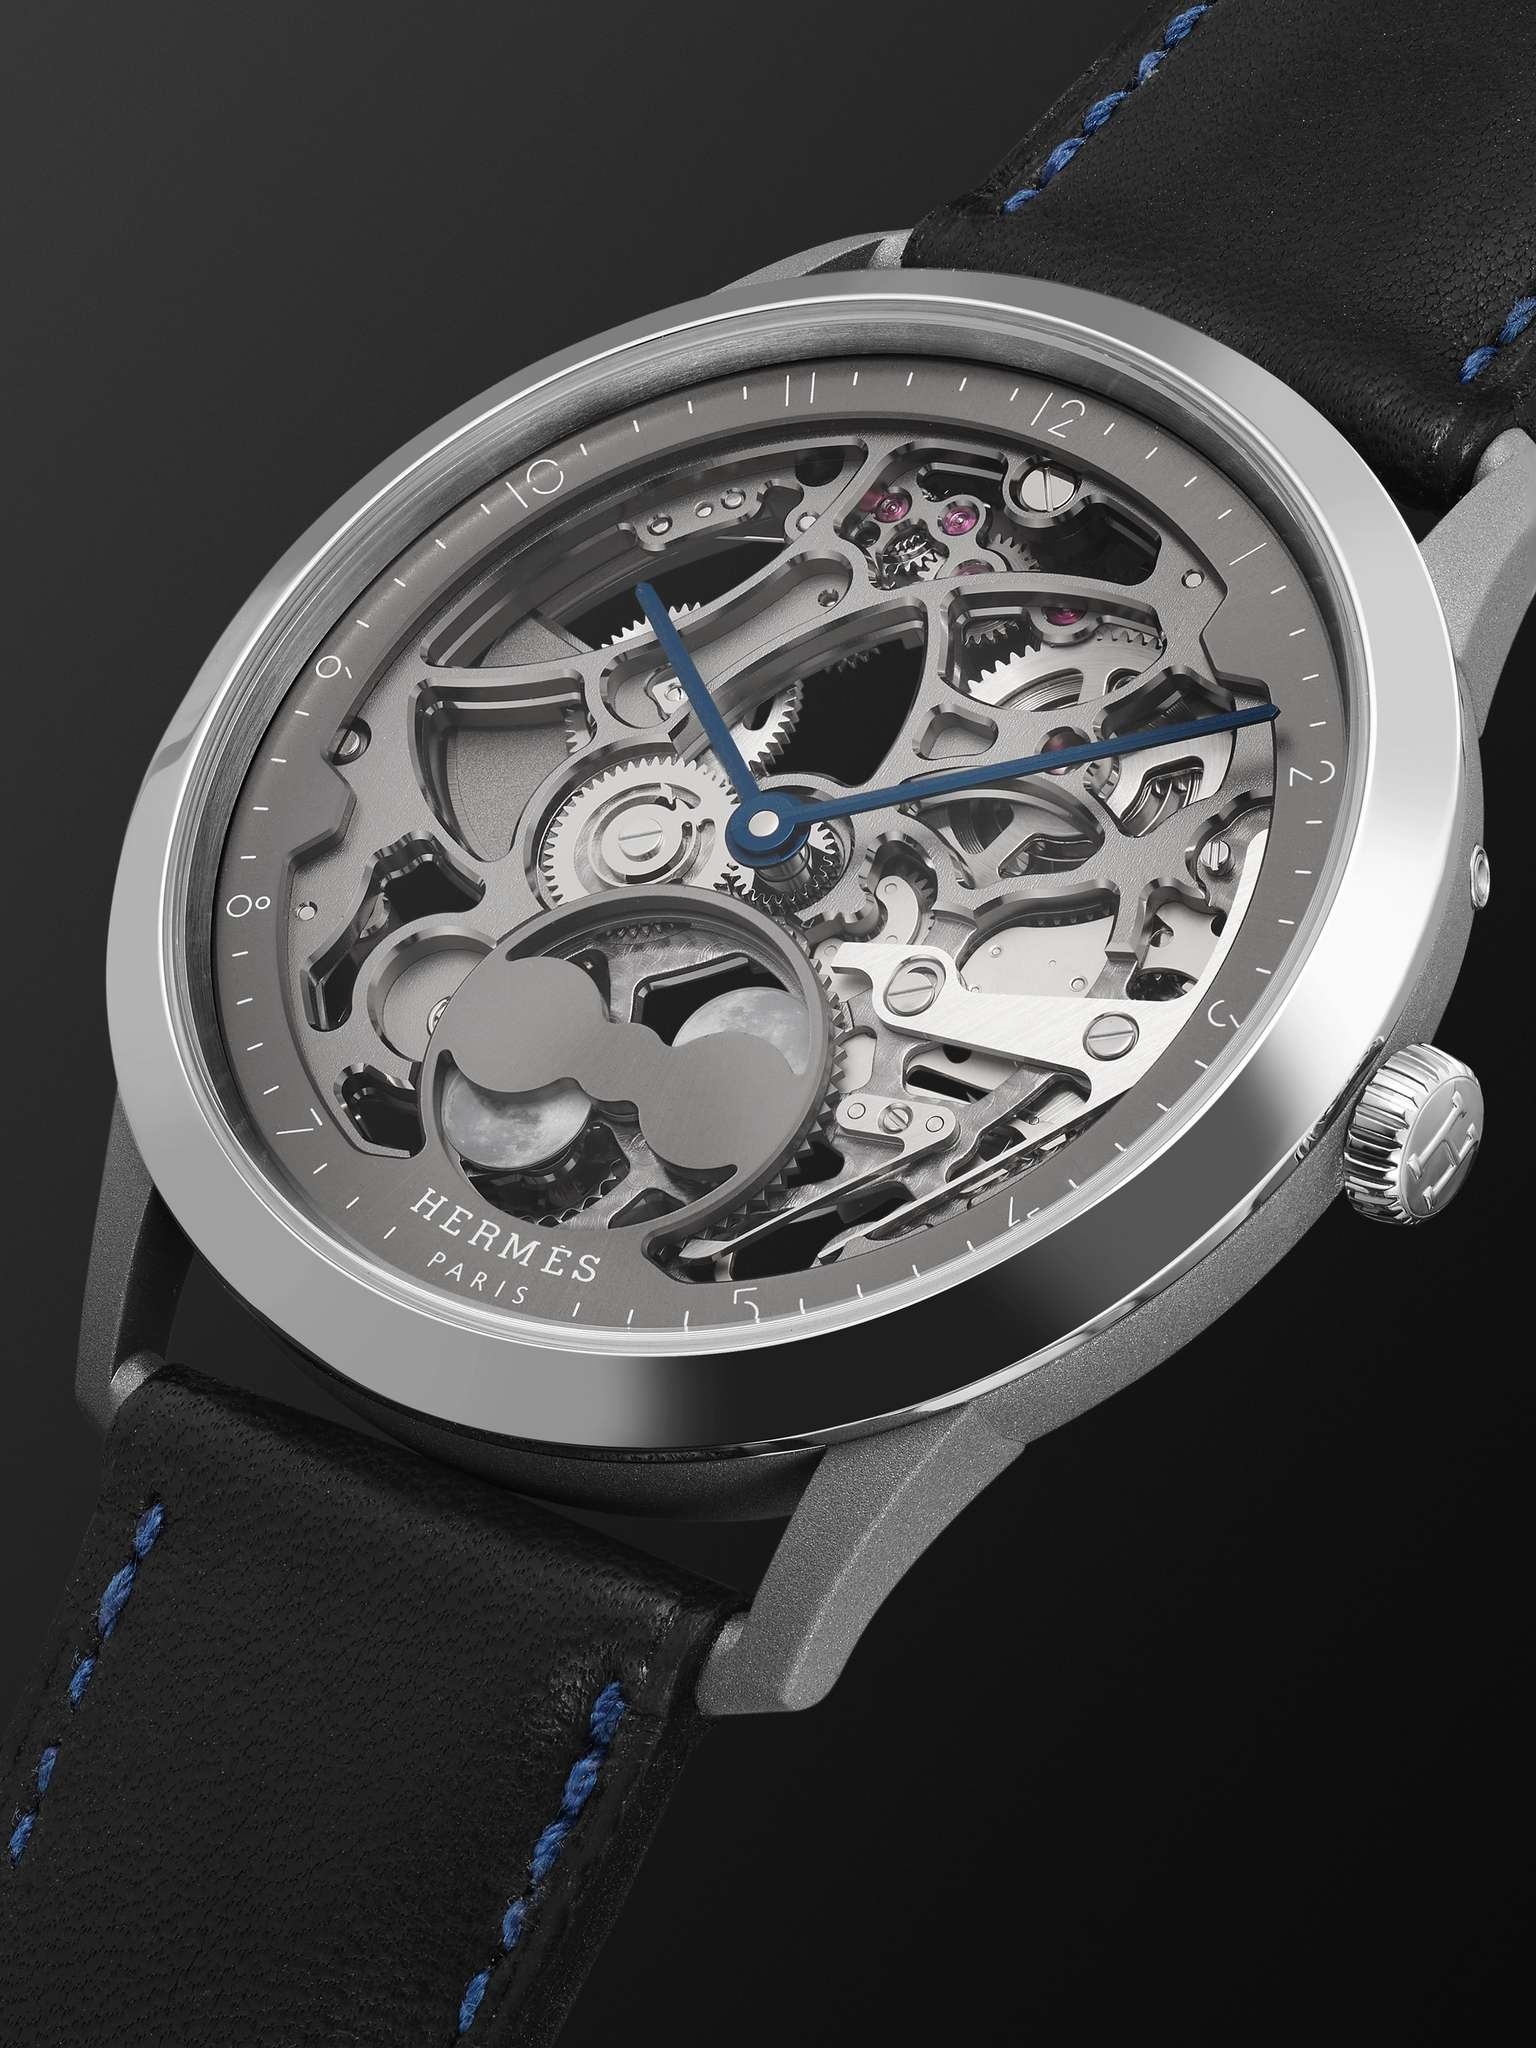 Slim d'Hermès Squelette Lune 39.5mm Automatic Titanium and Leather Watch, Ref. No. 054695WW00 - 4